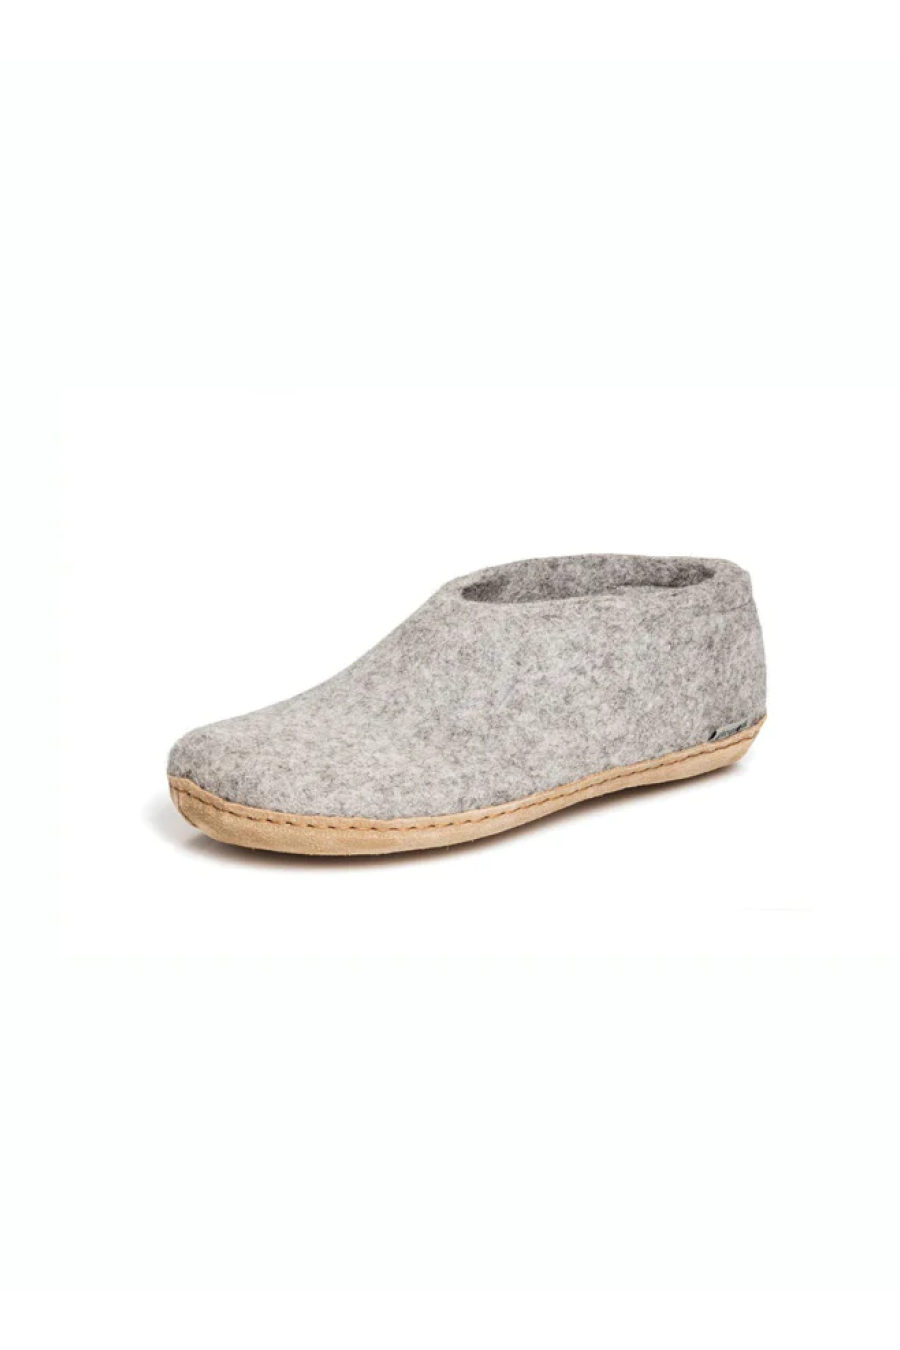 Glerups Shoe - Leather - Grey